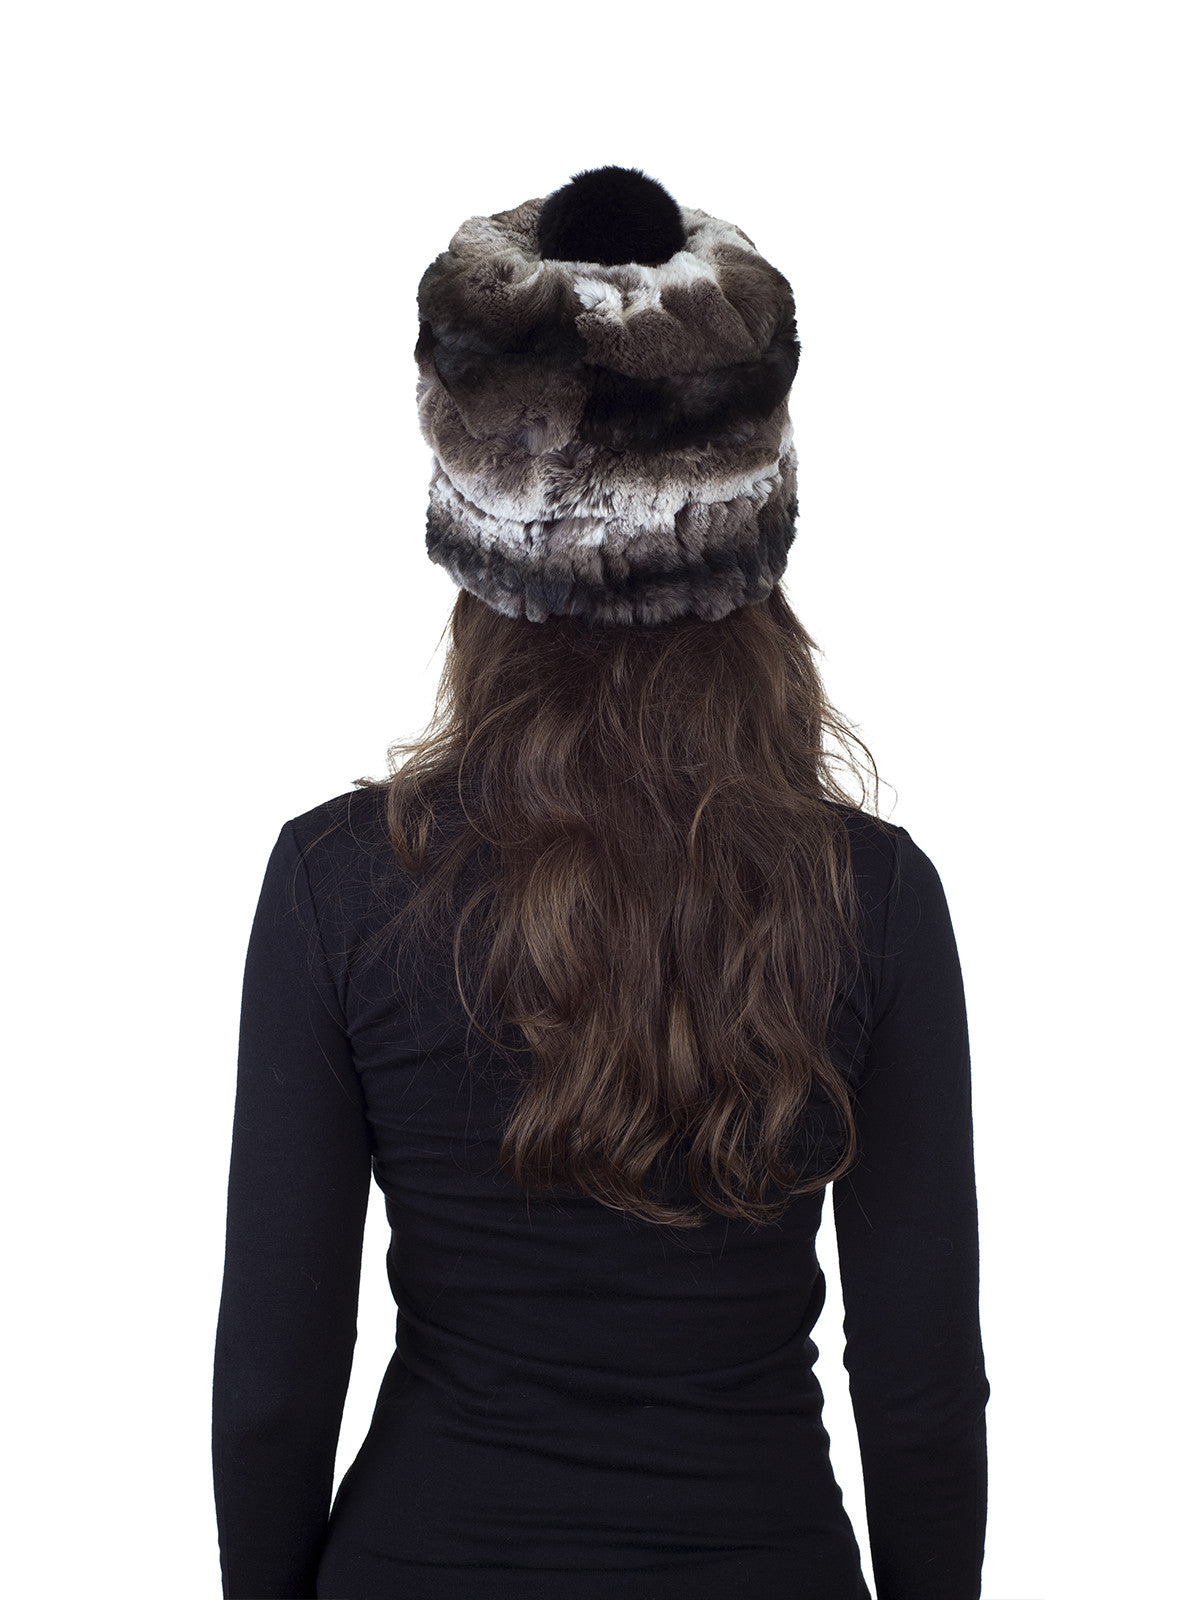 Brown/White Rex Rabbit Fur Hat with Pom Pom